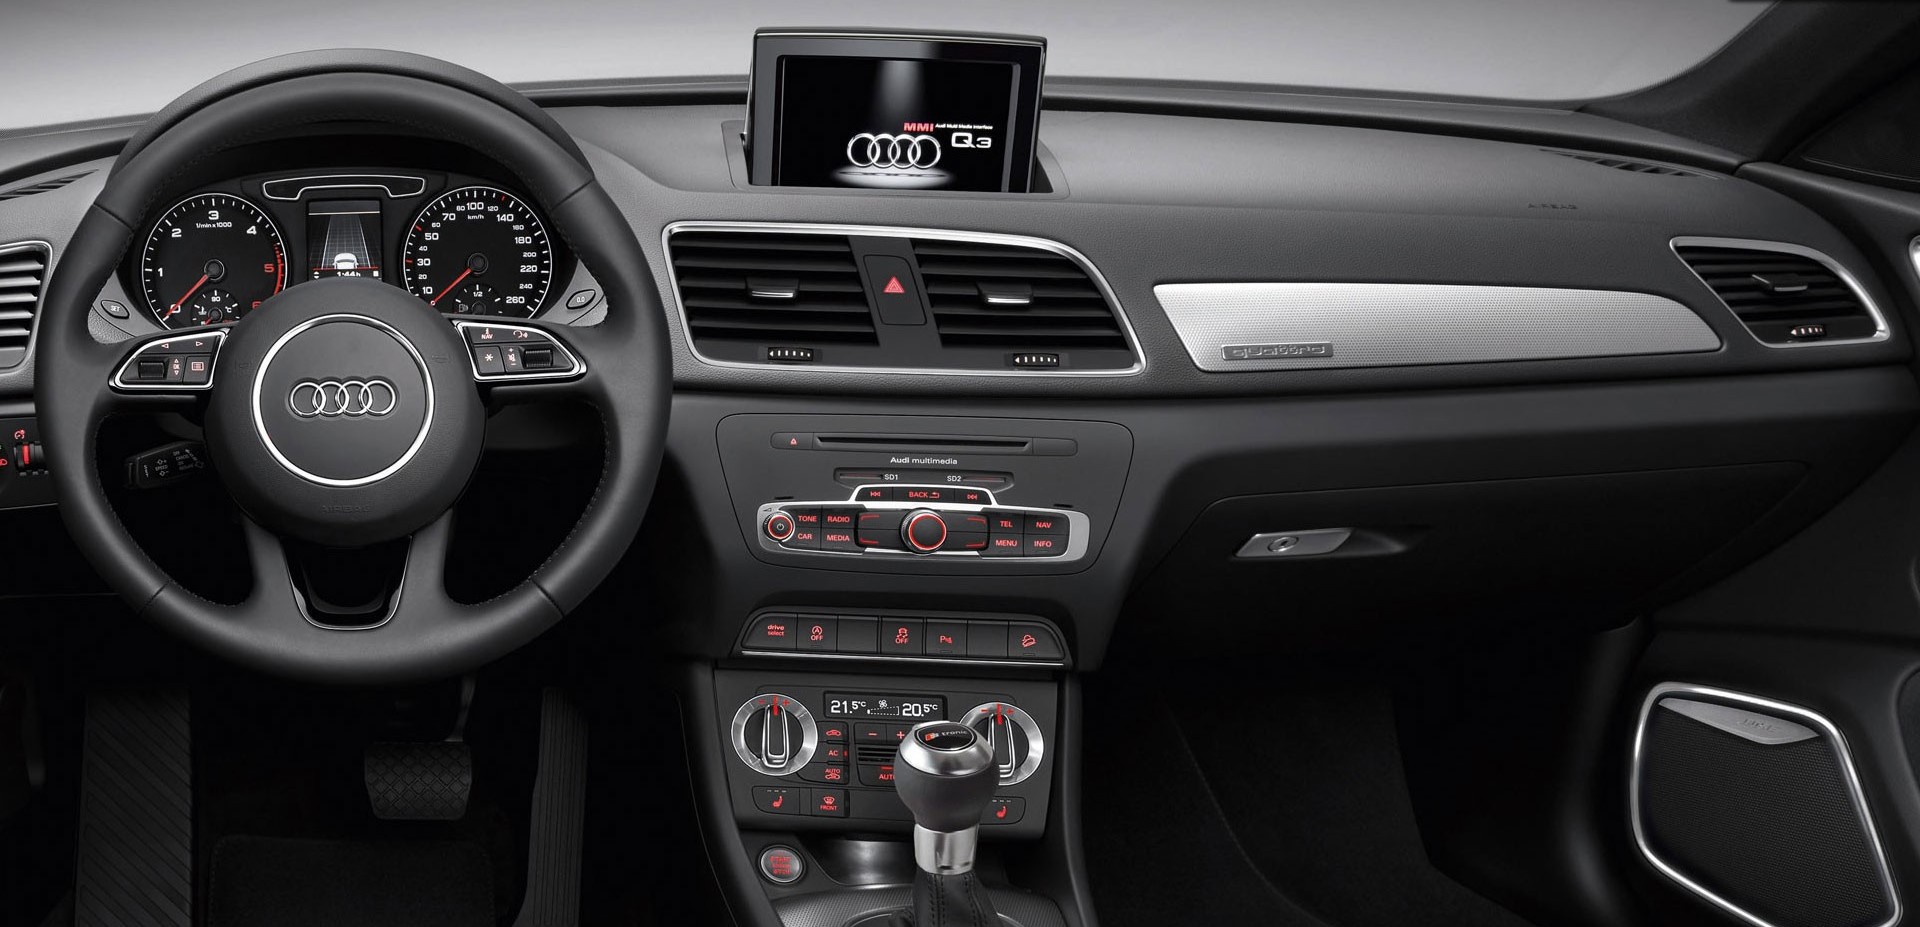 Audi Q3 Interior Dashboard